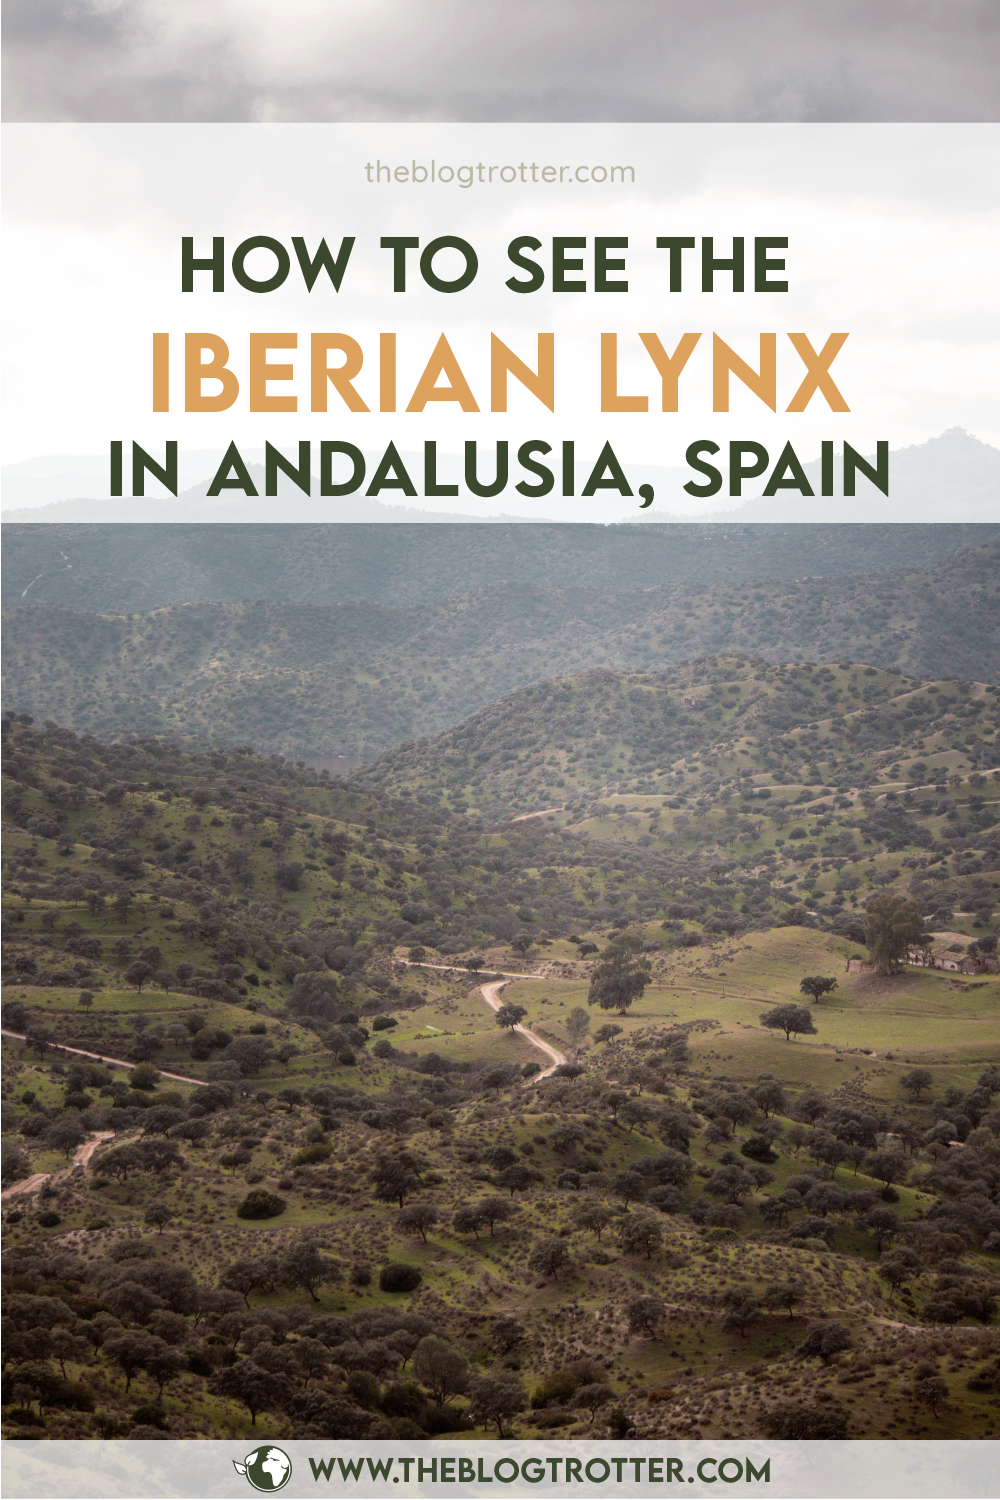 Iberian Lynx article visual for Pinterest - Option 5